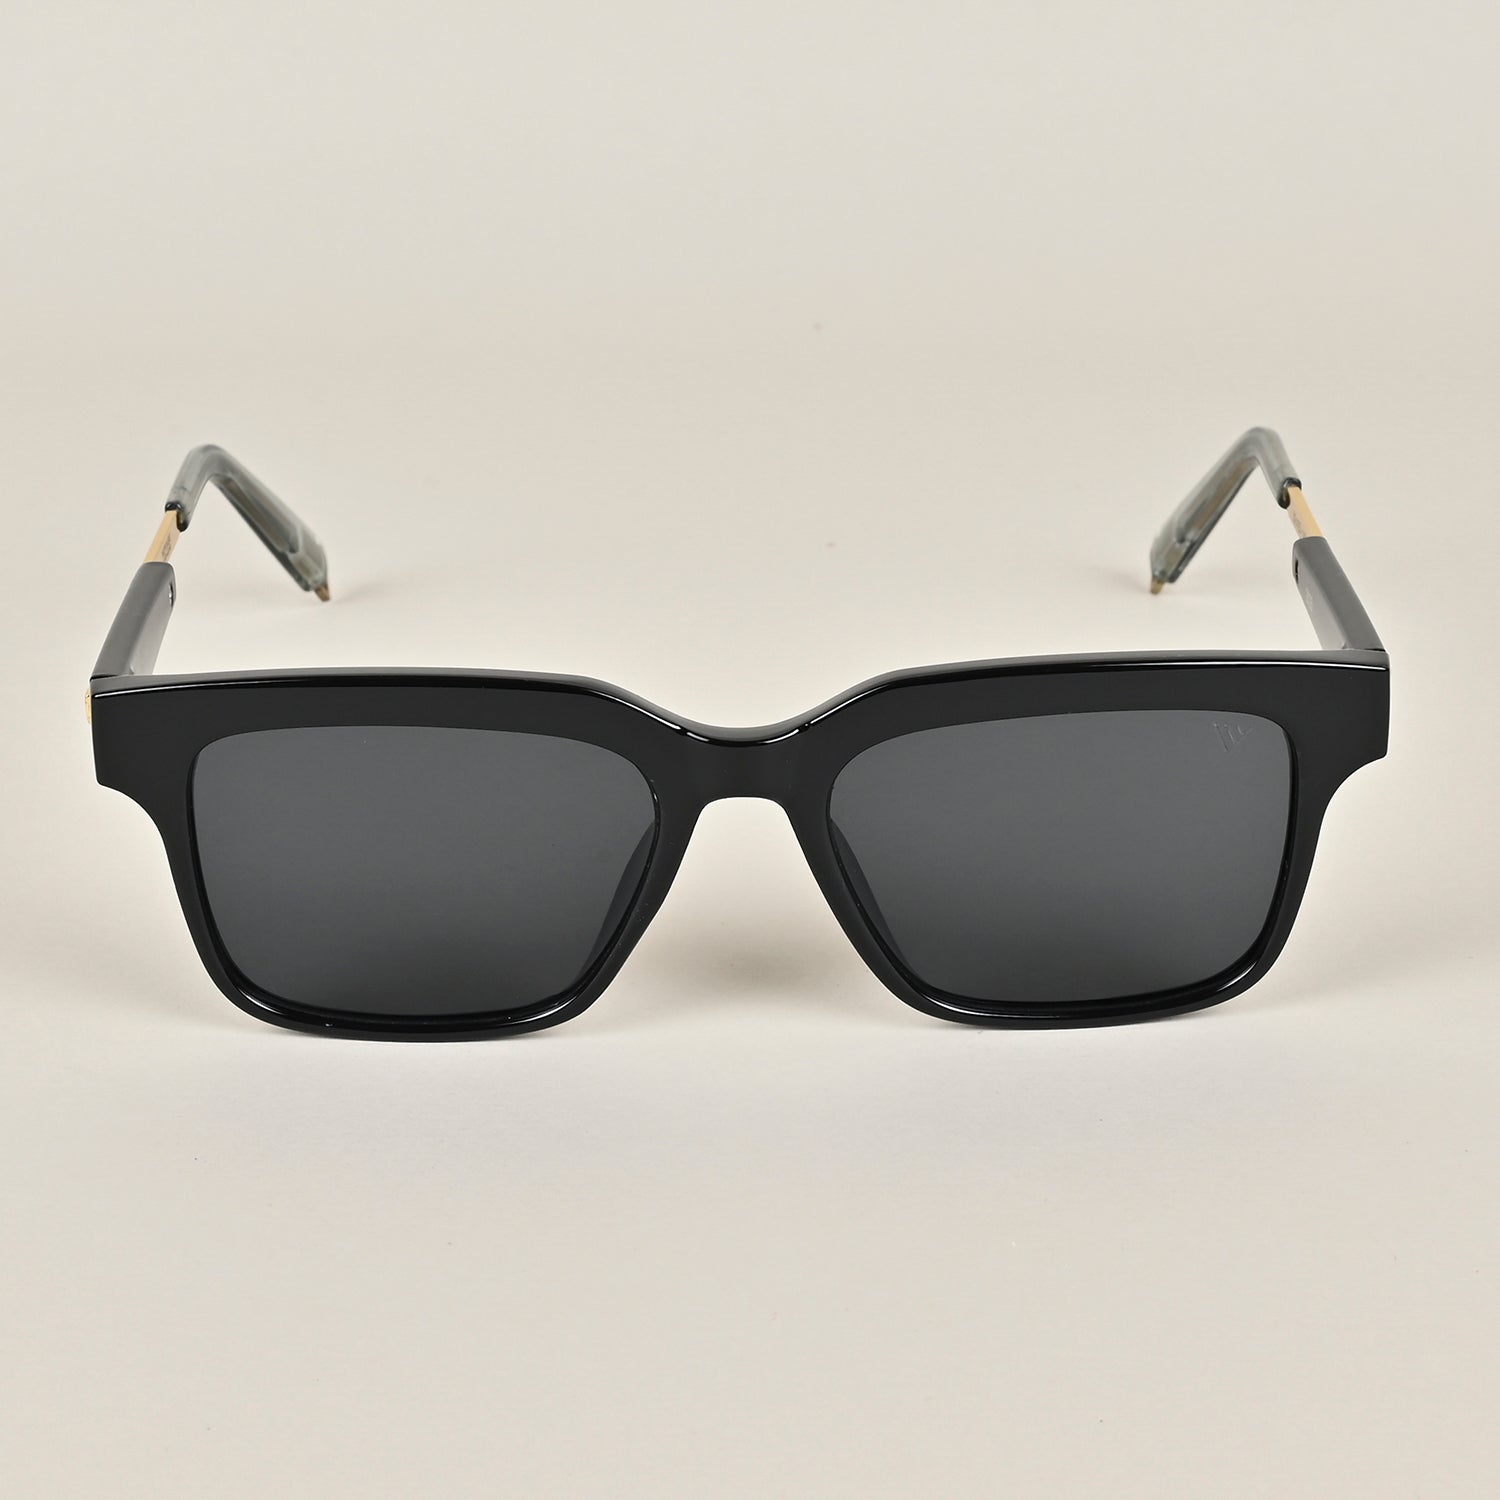 Voyage Black Wayfarer Sunglasses - MG3564